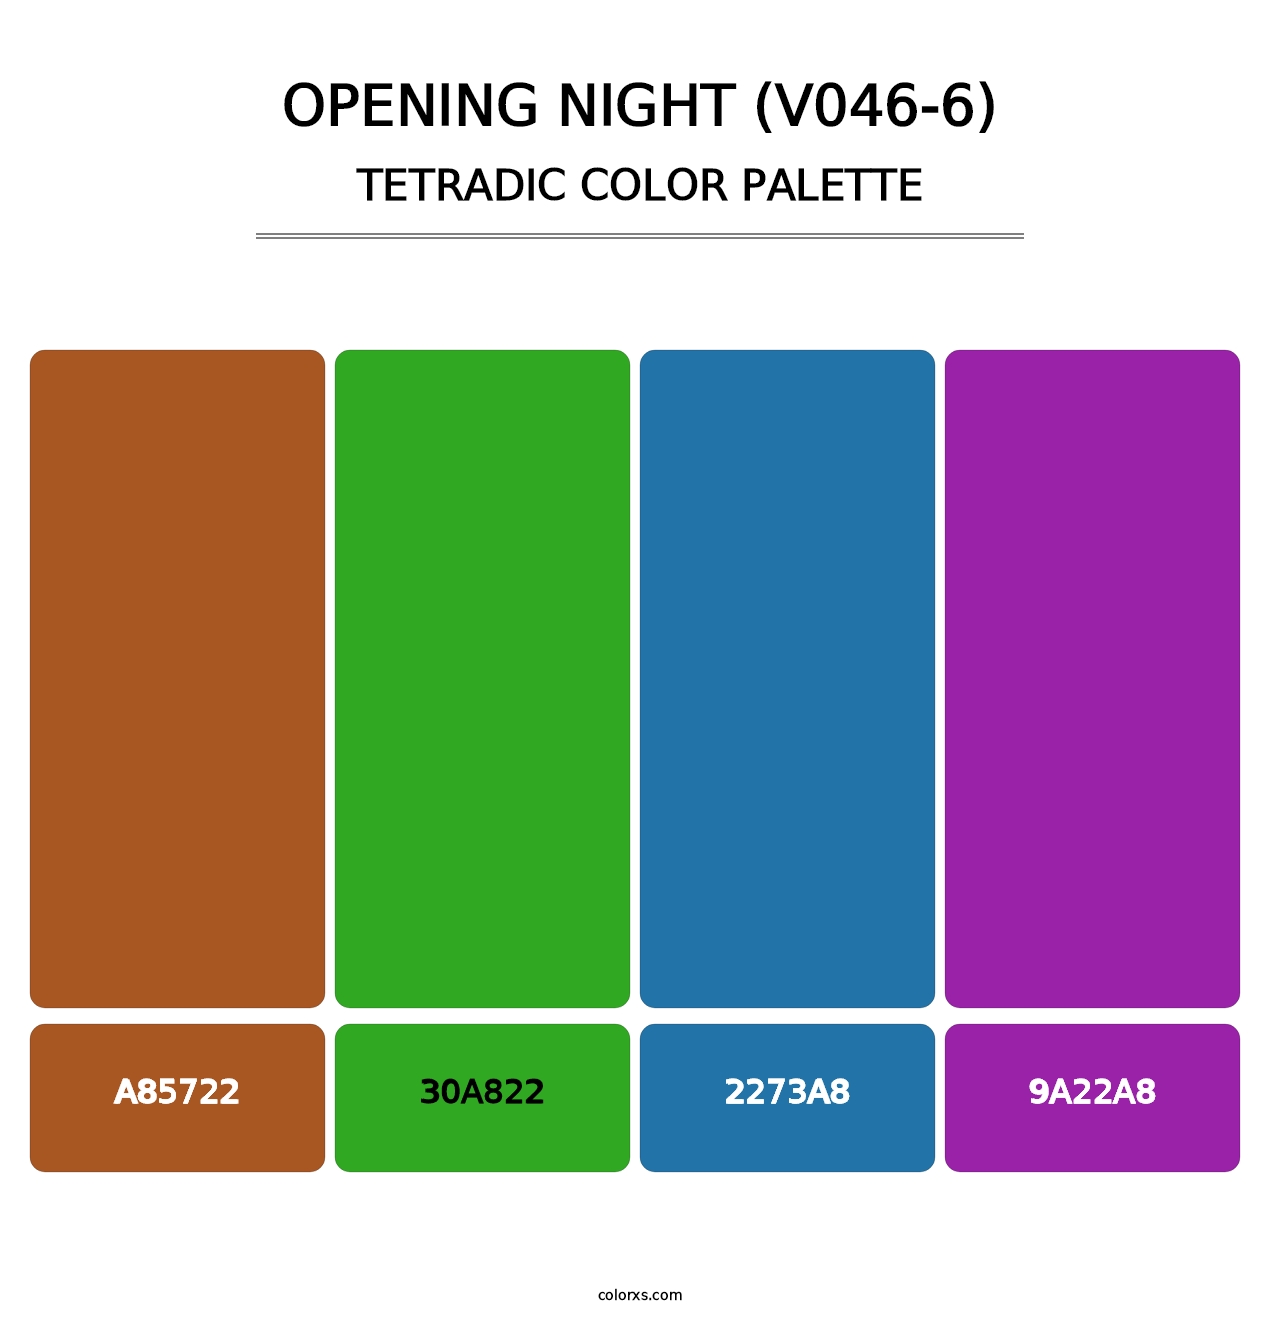 Opening Night (V046-6) - Tetradic Color Palette